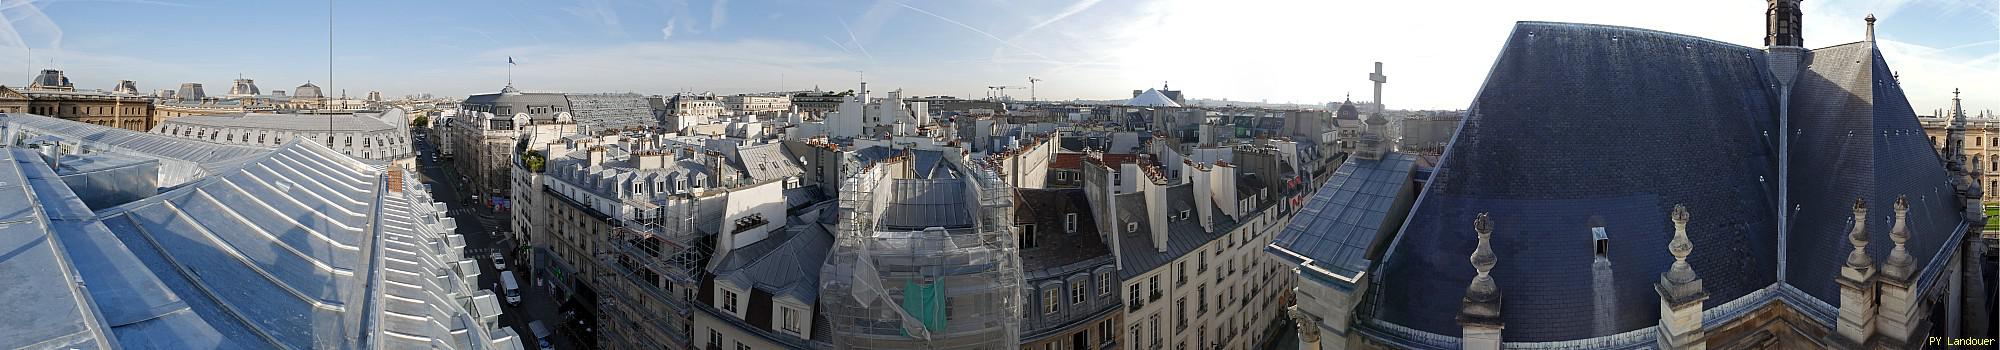 Paris vu d'en haut,  4 rue de Marengo